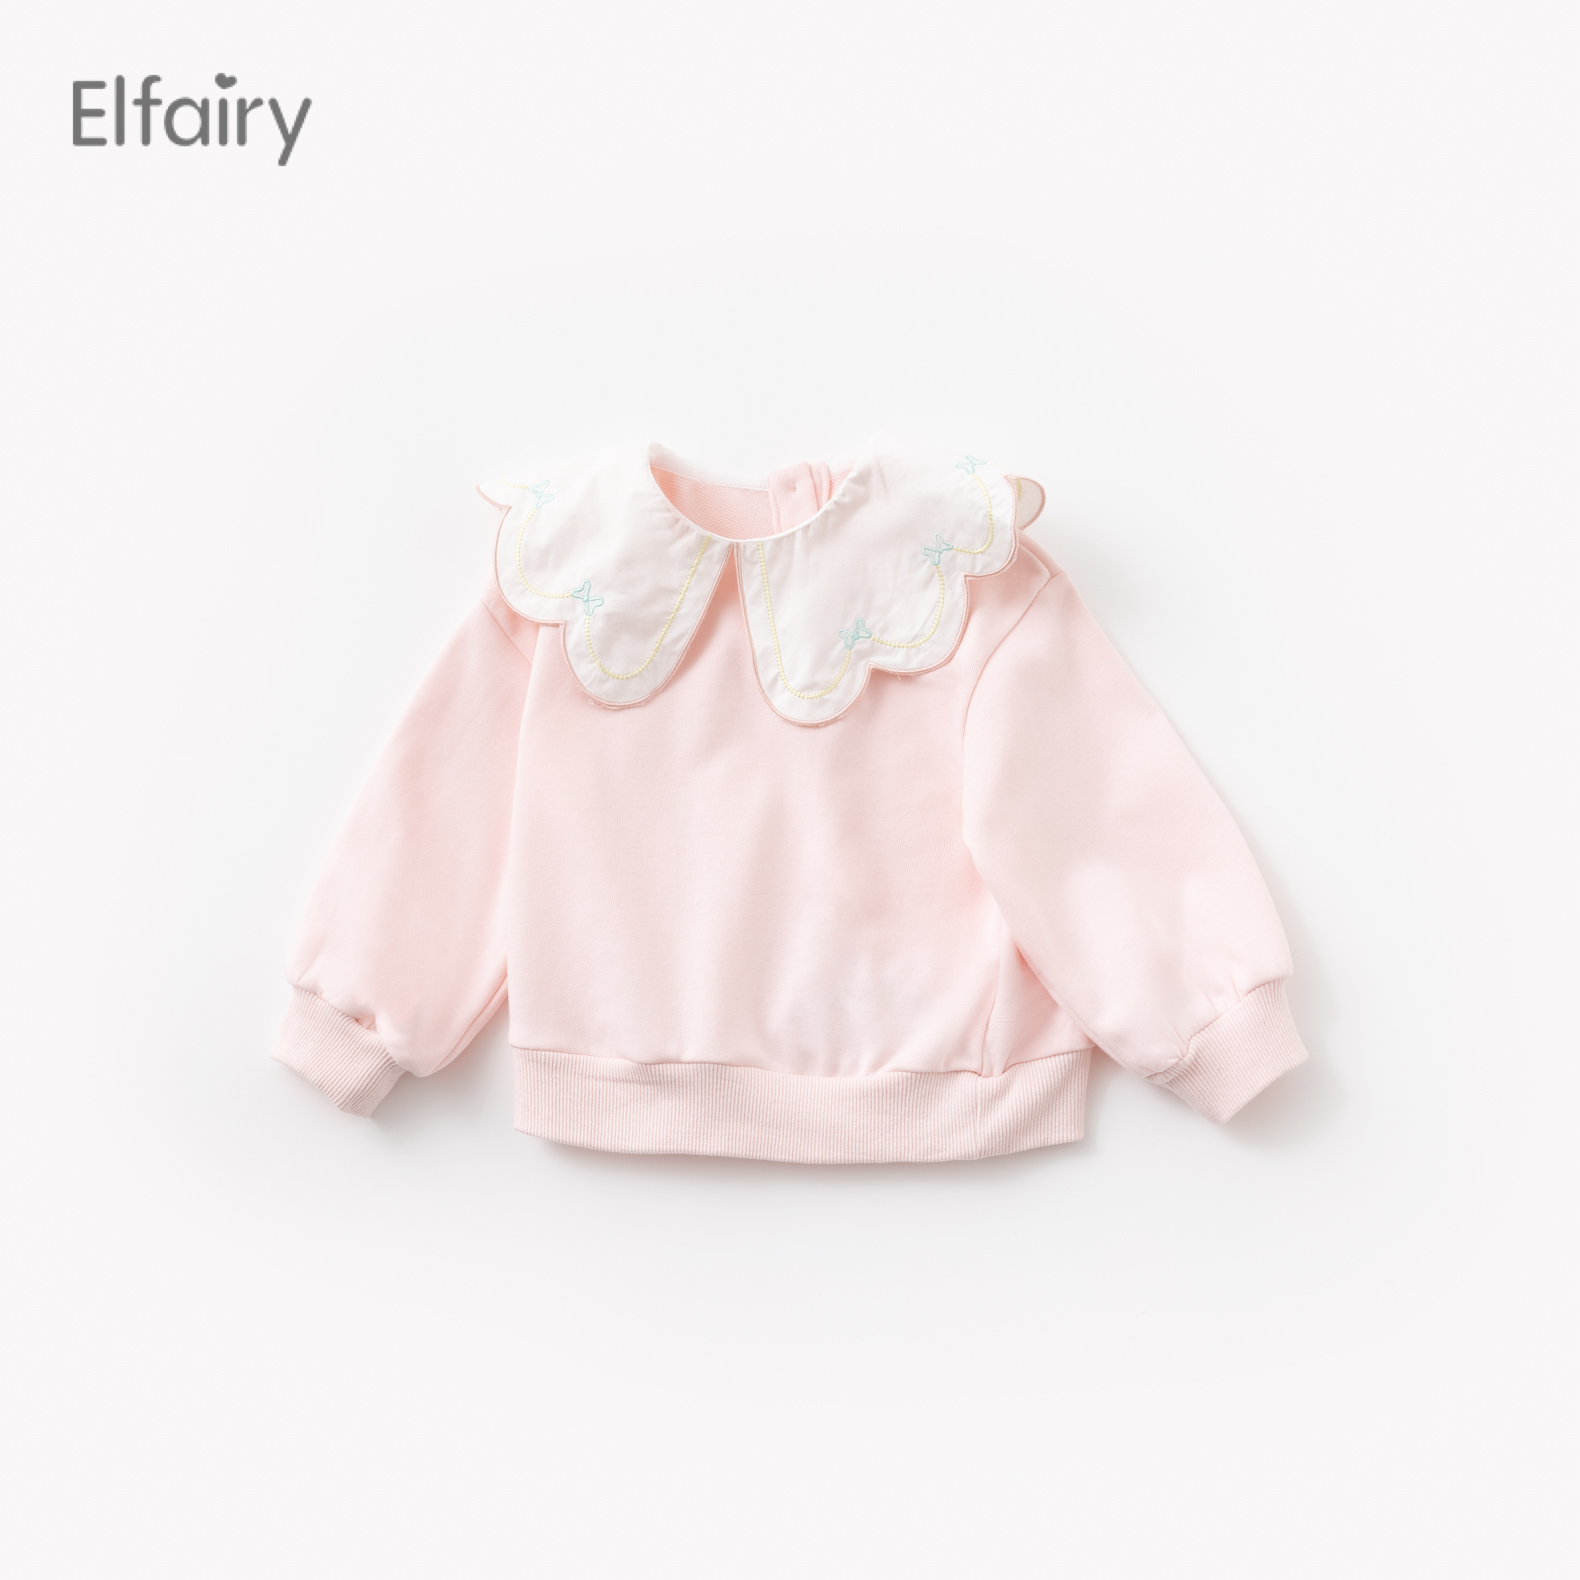 Elfairy女童卫衣女宝宝T恤婴幼儿长袖上衣儿童套头衣服公主春秋装